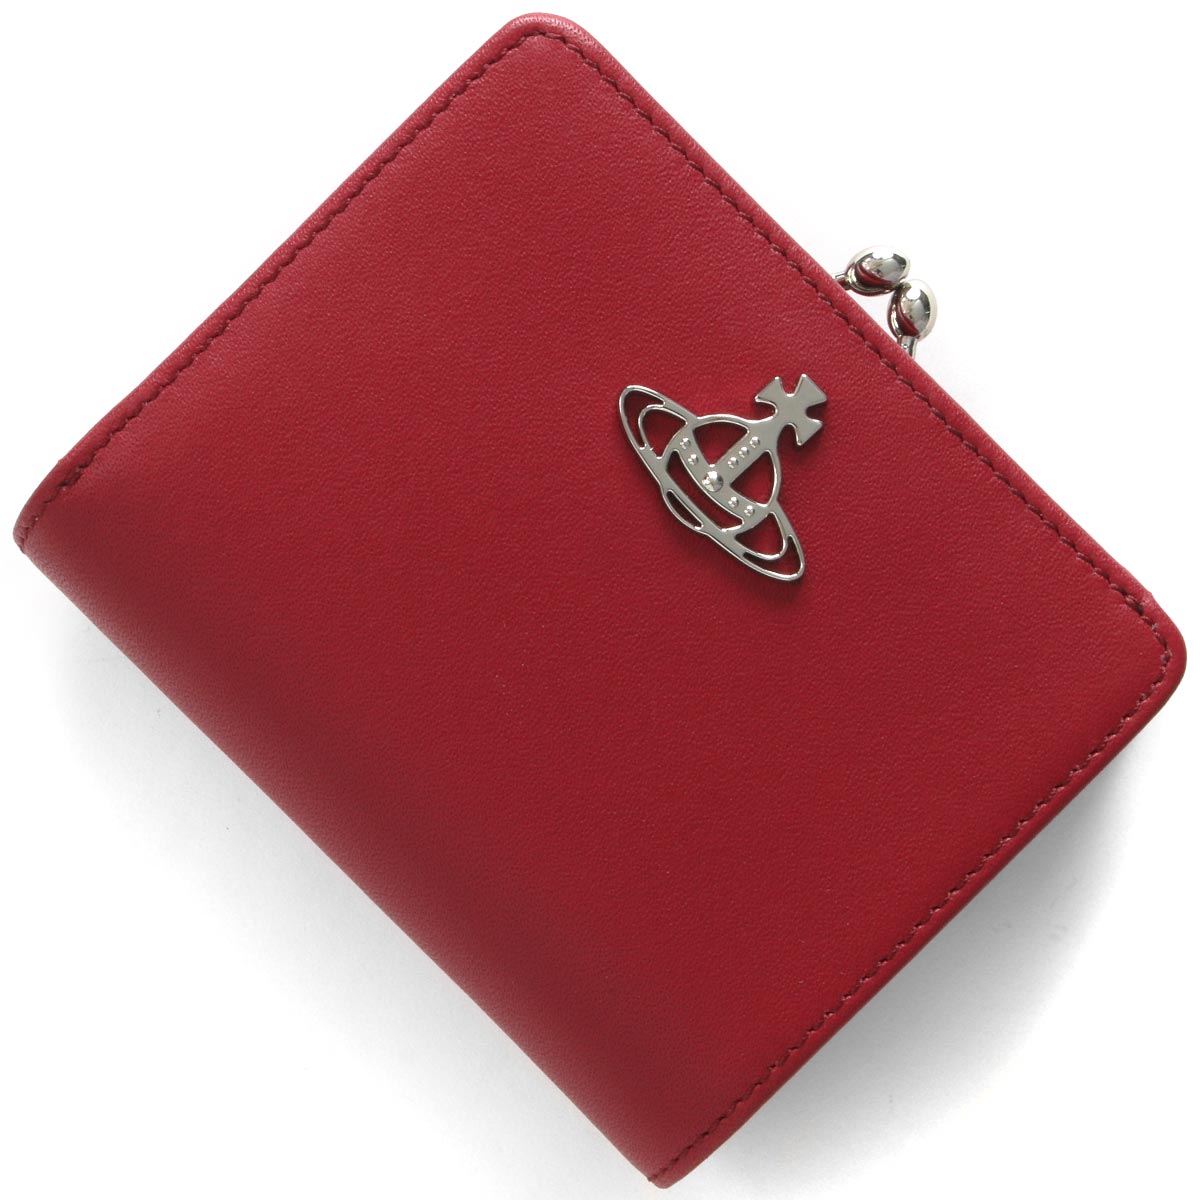 Vivienne Westwood / ヴィヴィアンウエストウッド ■ オーブ 二つ折り長財布 レザー 赤 ブランド  [0990008222]